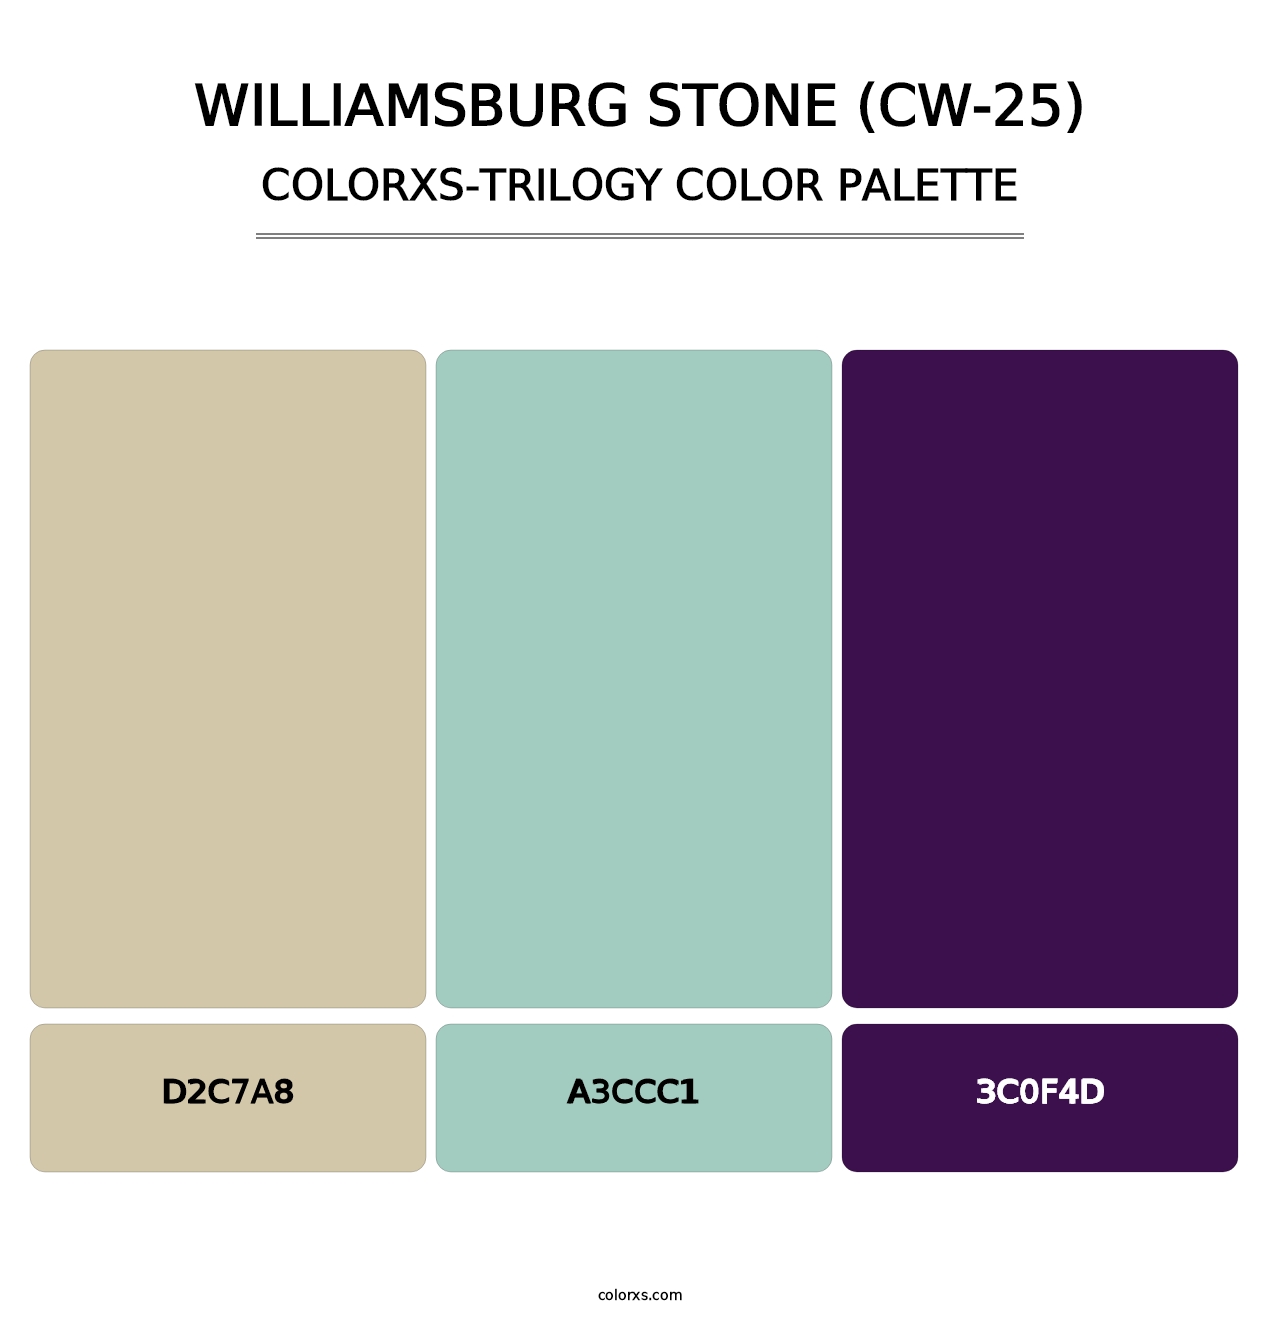 Williamsburg Stone (CW-25) - Colorxs Trilogy Palette